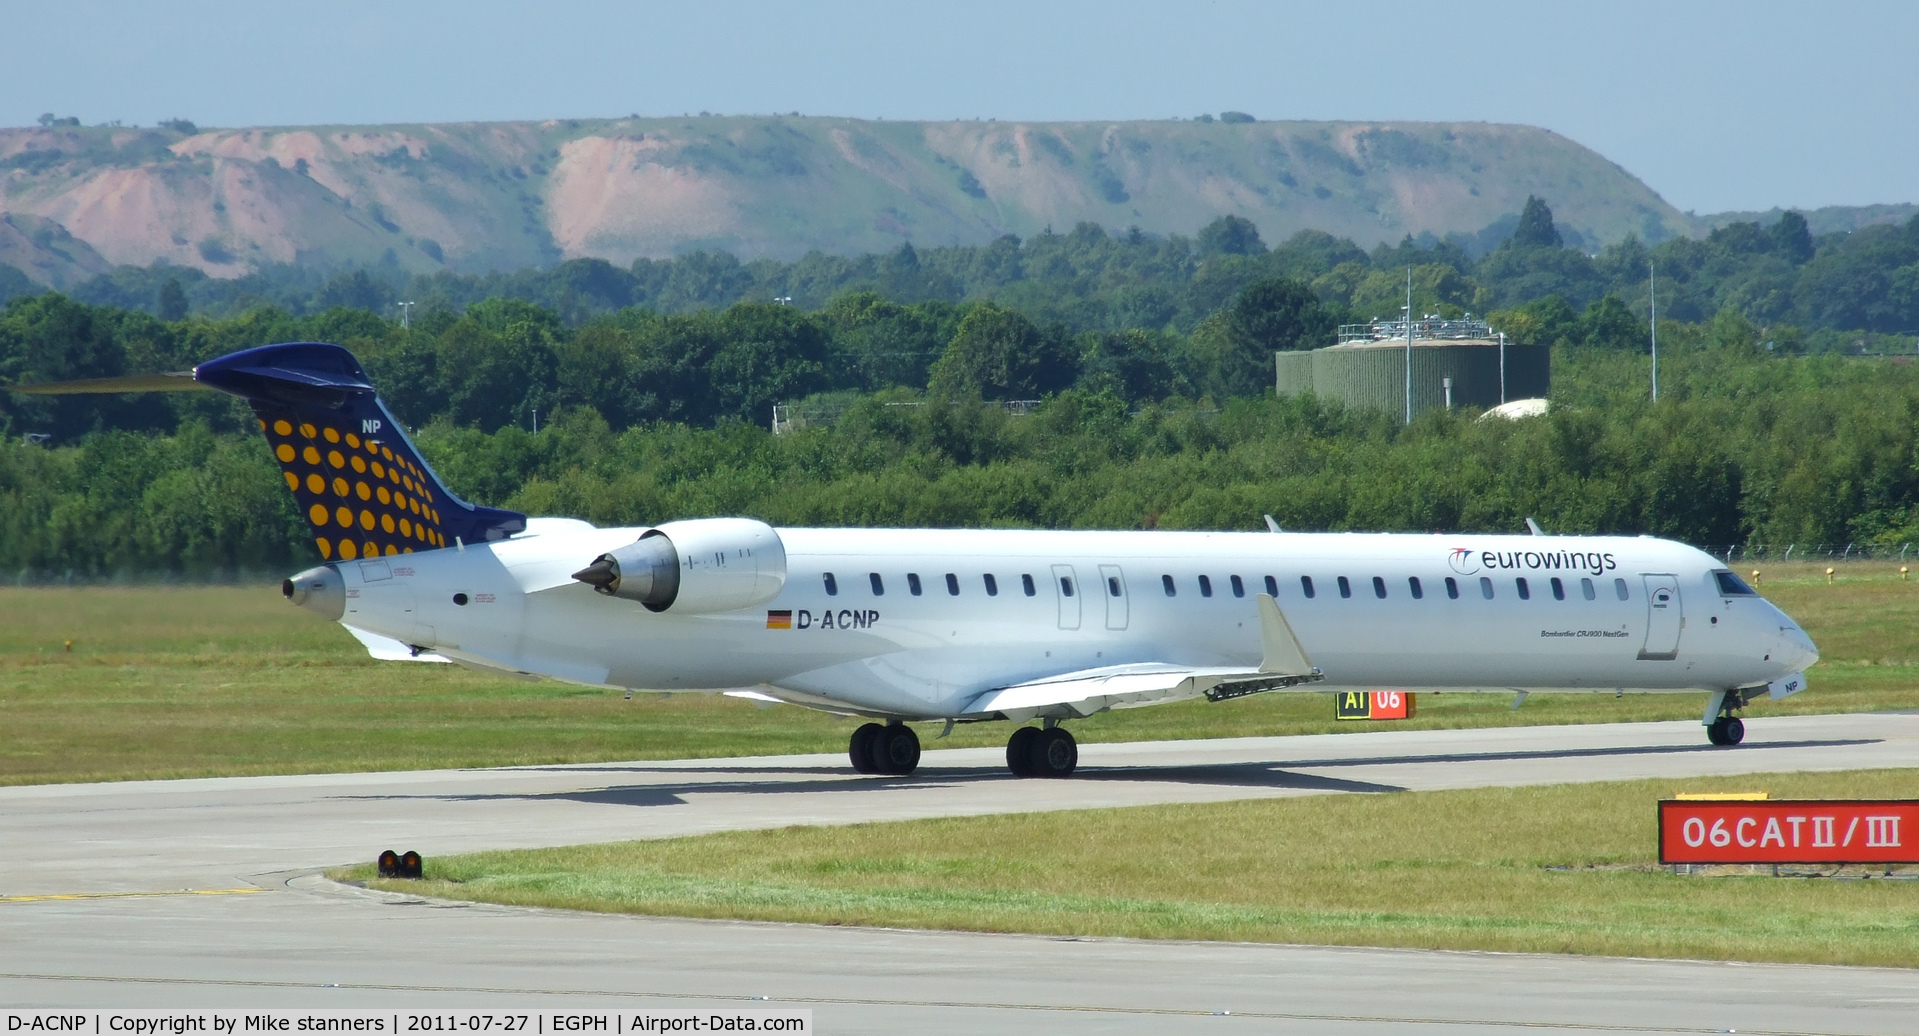 D-ACNP, 2010 Bombardier CRJ-900LR (CL-600-2D24) C/N 15259, “Lufthansa 5MK” waiting to enter runway 06 For departure back to DUS